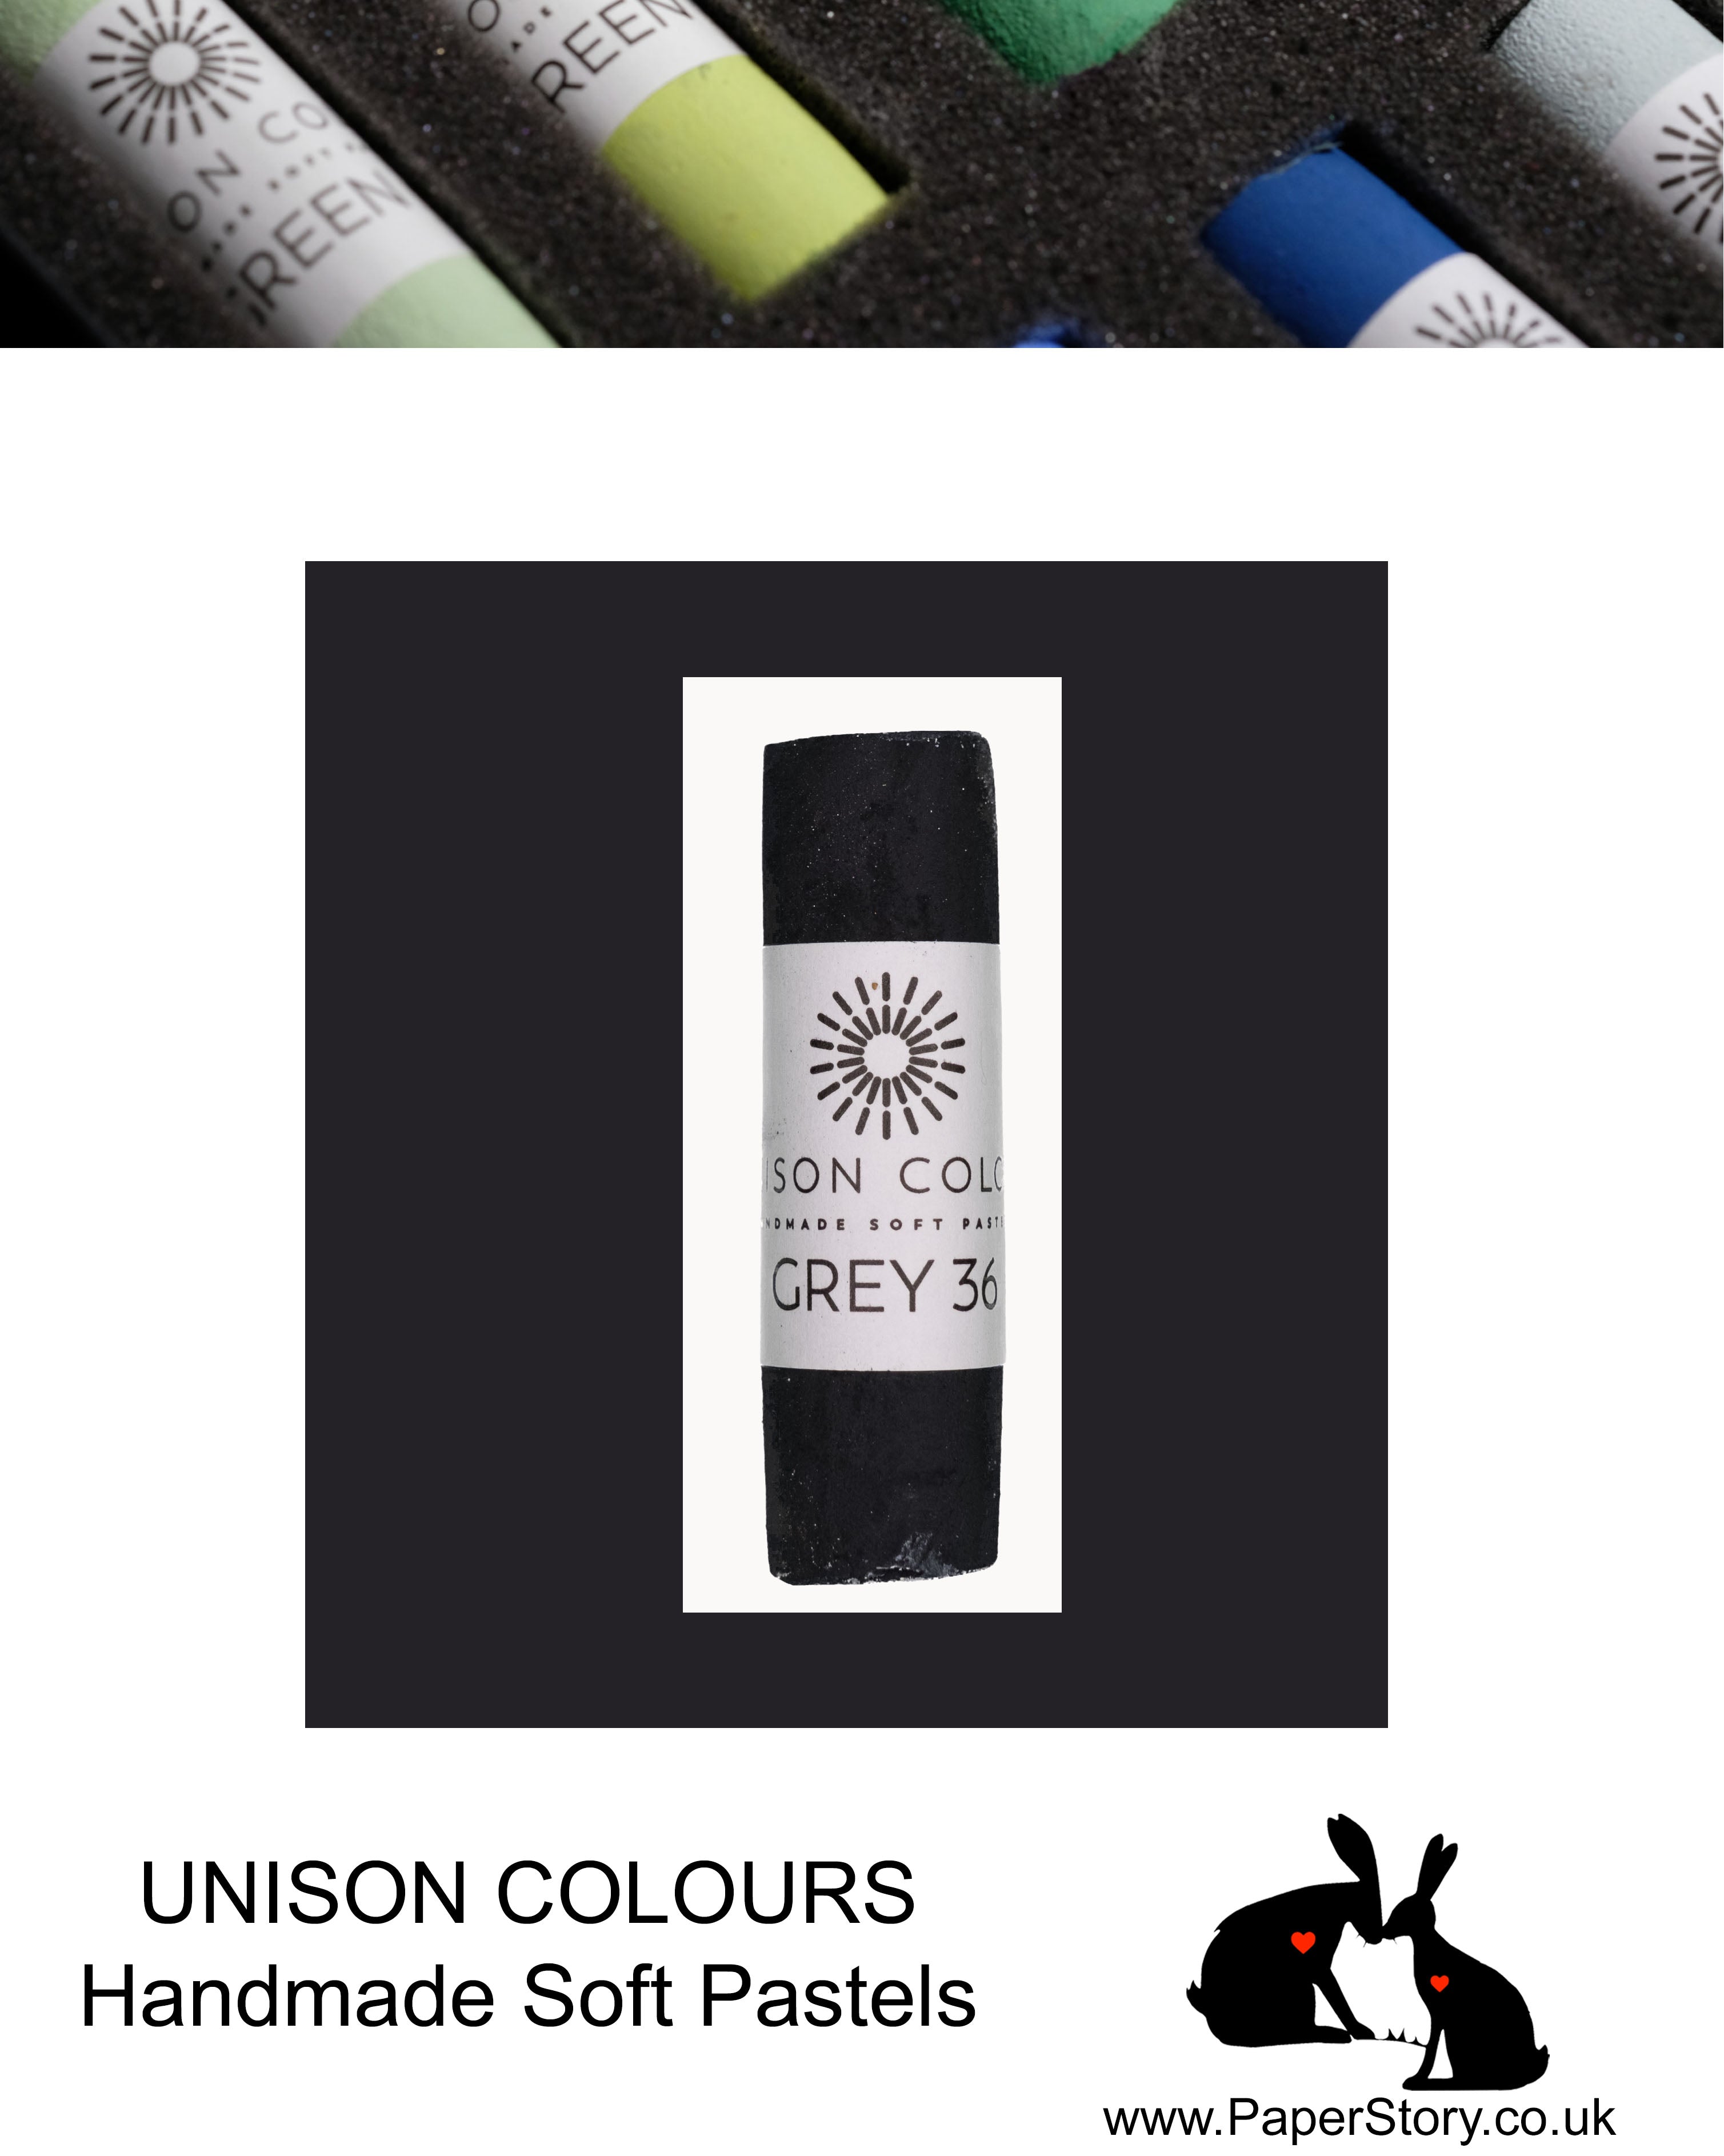 Unison Colour Handmade Soft Pastels Grey 36 - Size Regular